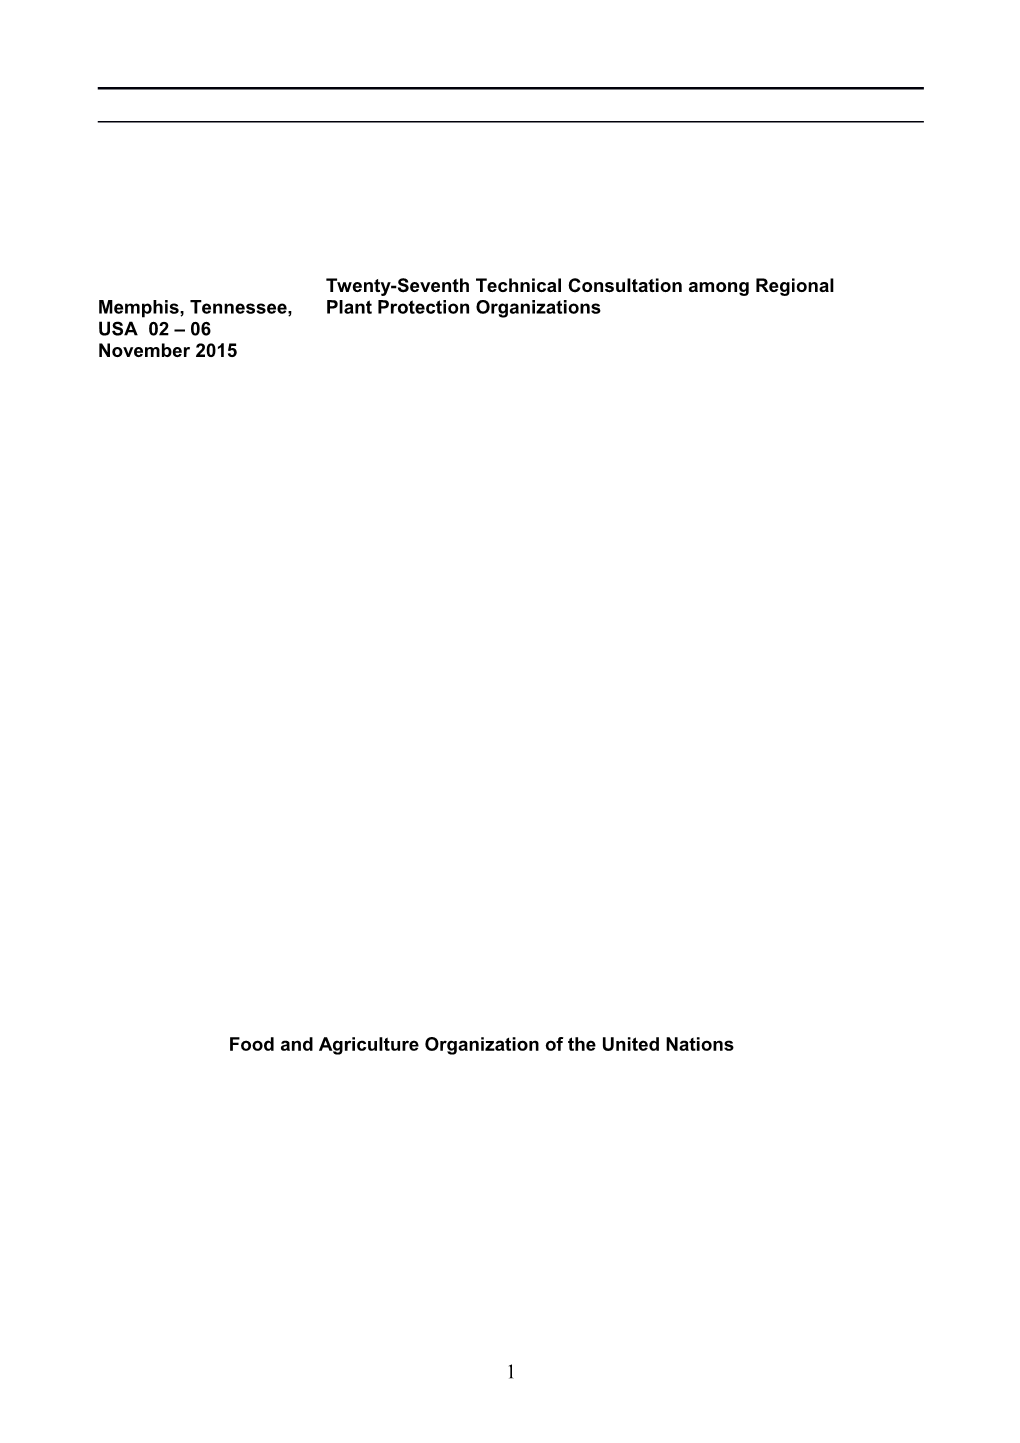 Report TC-Rppos 2012 XXIV 2013-02-13